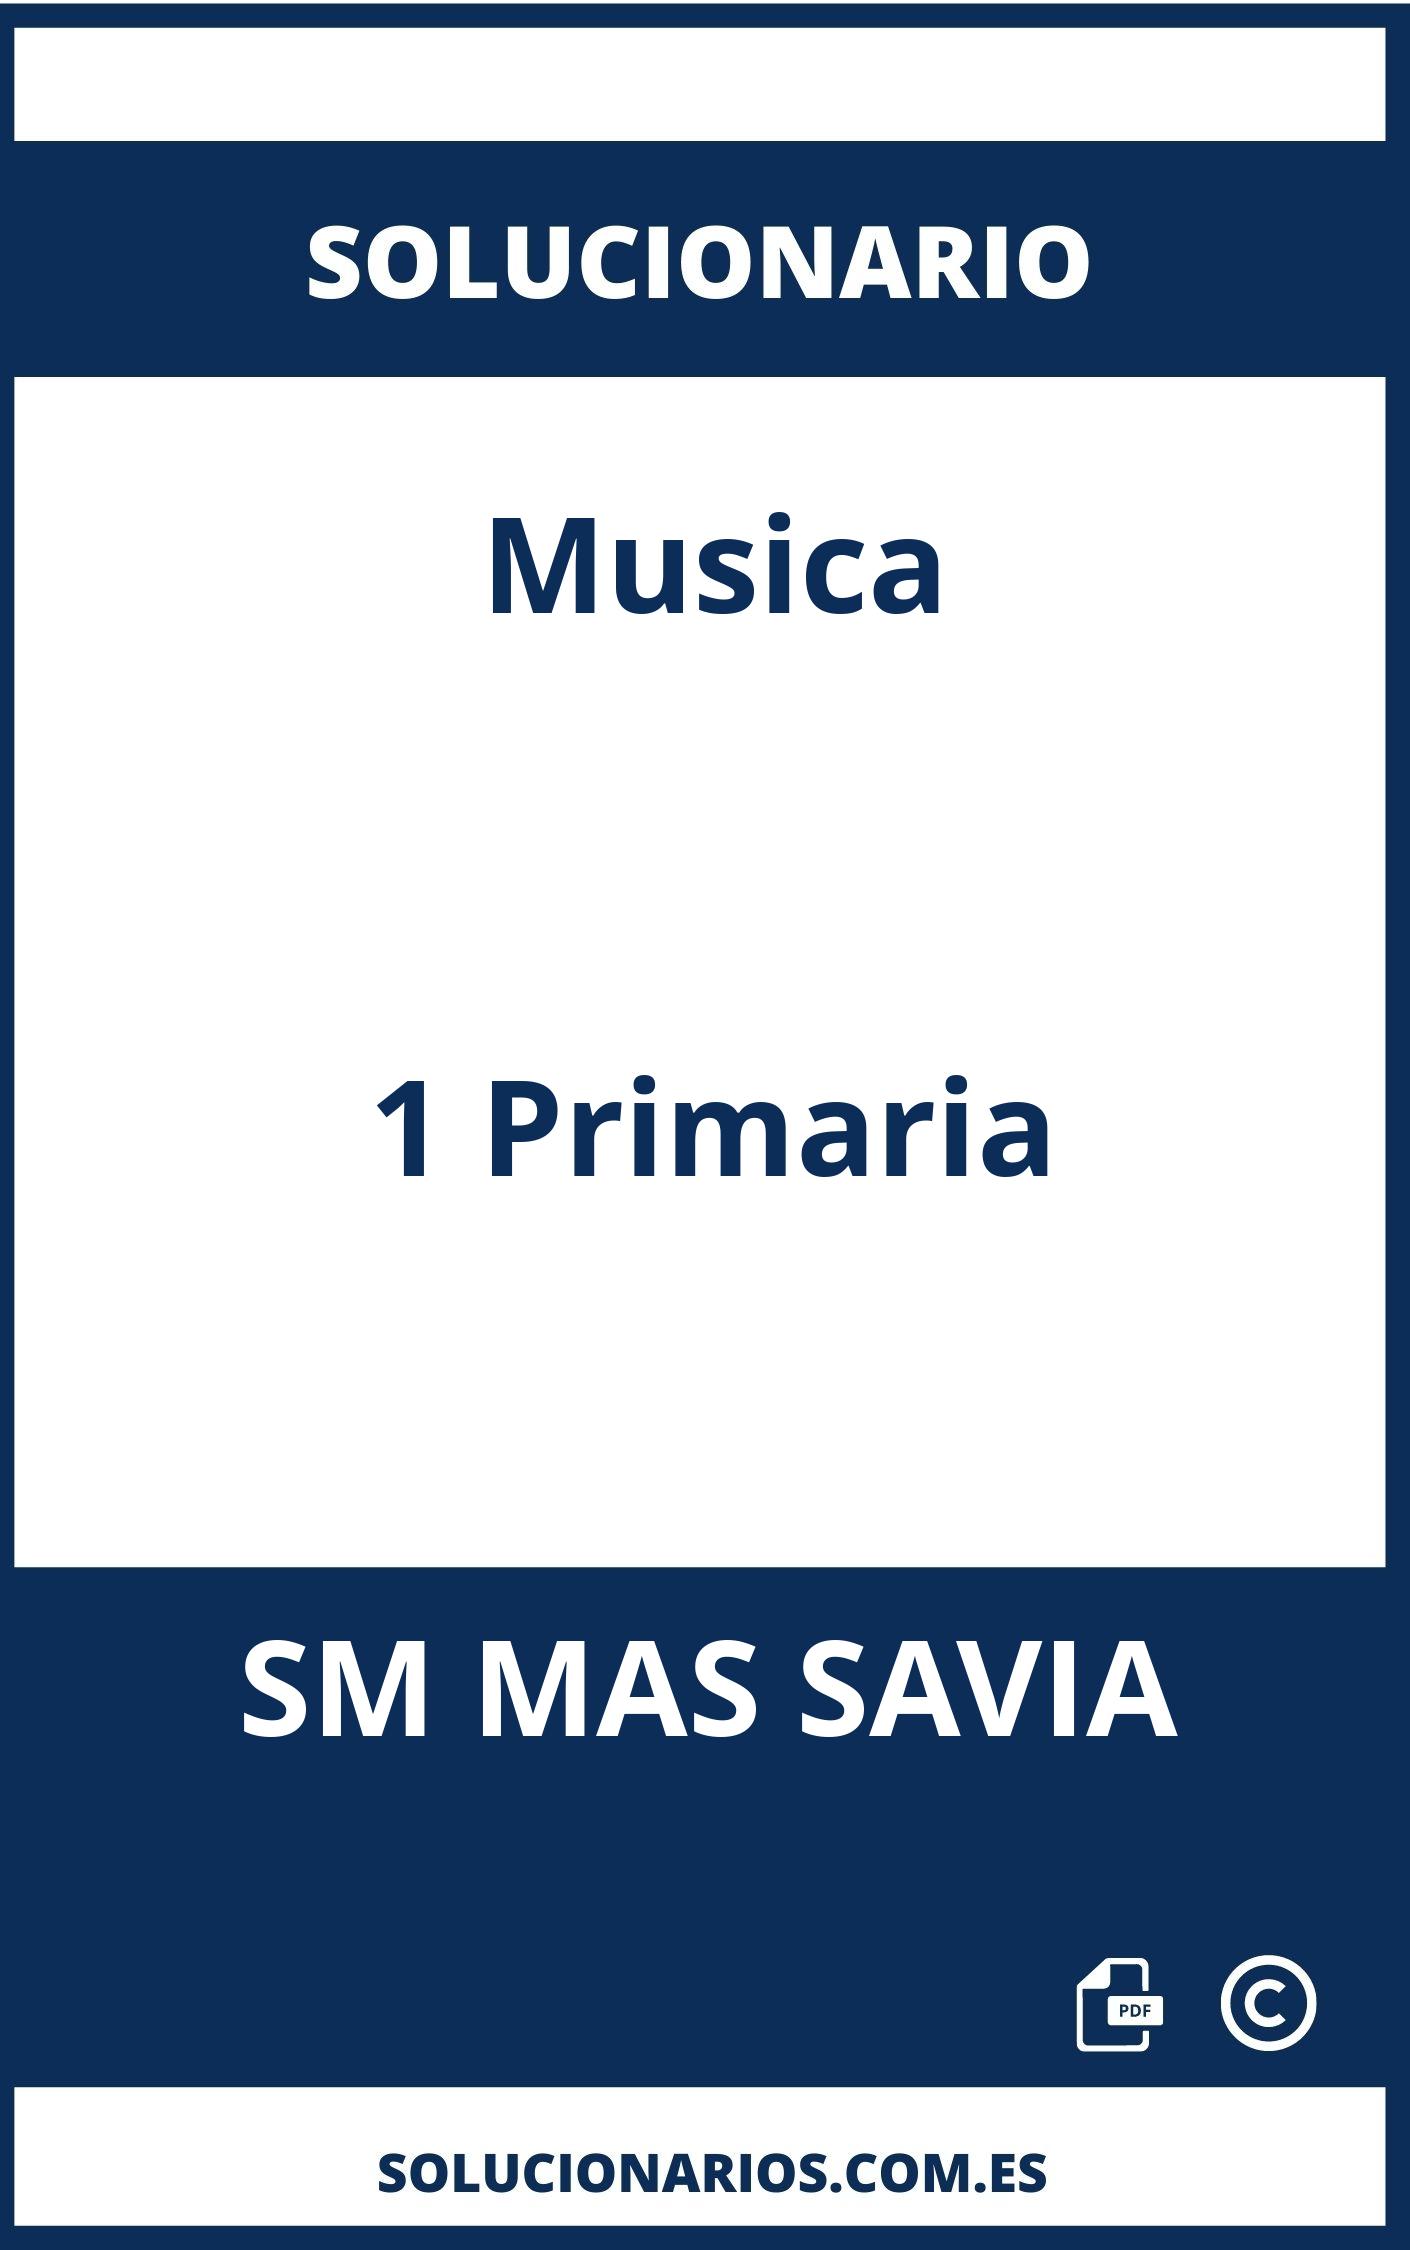 Solucionario Musica 1 Primaria SM MAS SAVIA